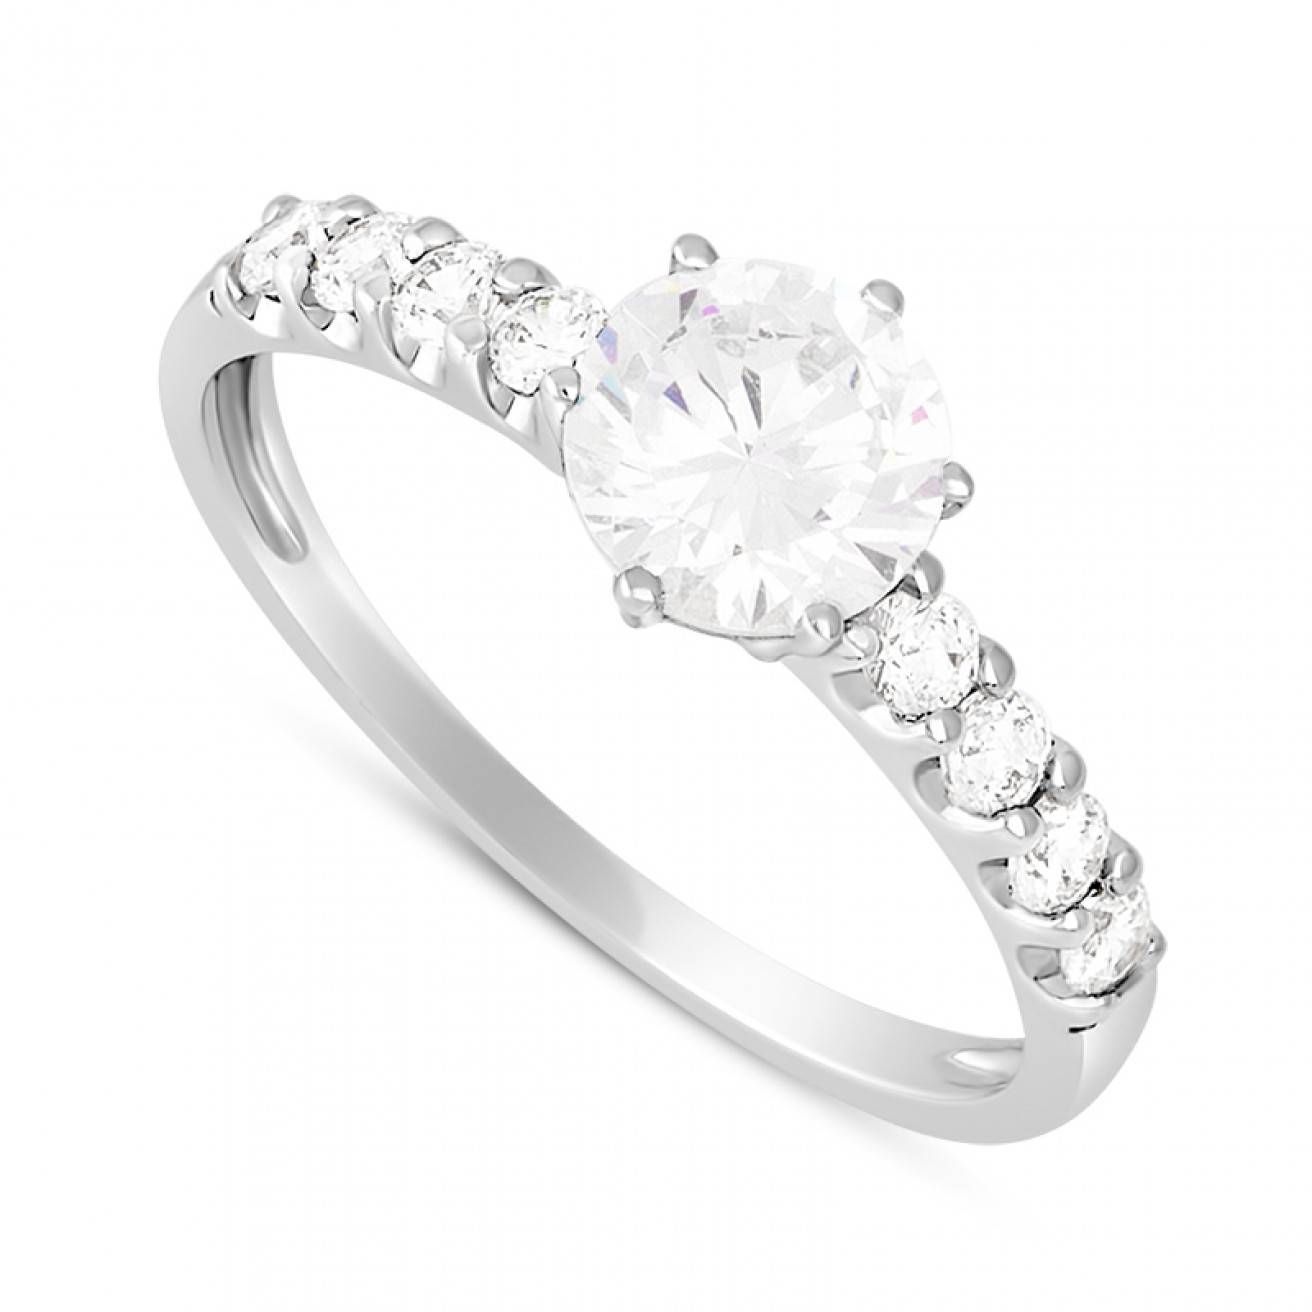 Buy A White Gold Engagement Ring – Fraser Hart With White Gold Engagement And Wedding Rings (View 6 of 15)